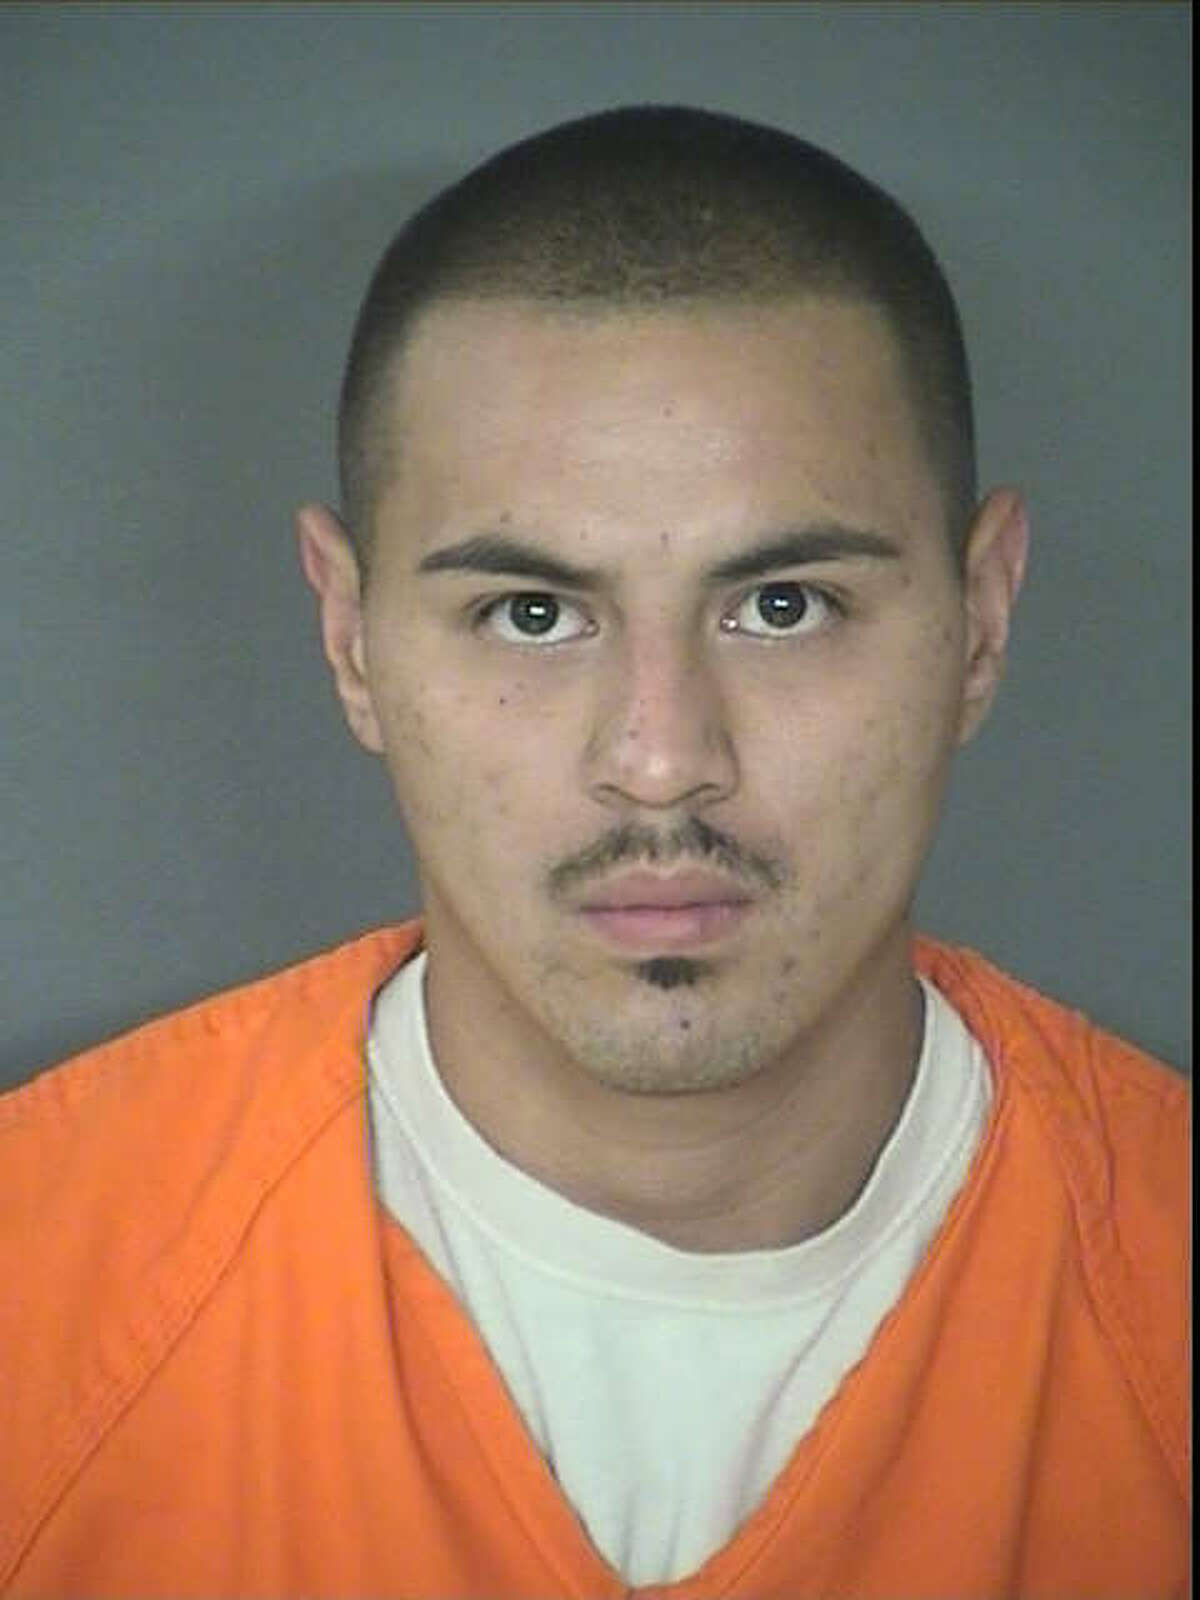 Aaron M. Herrera, 22, is accused of sexually assaulting a 14-year-old girl he met online.